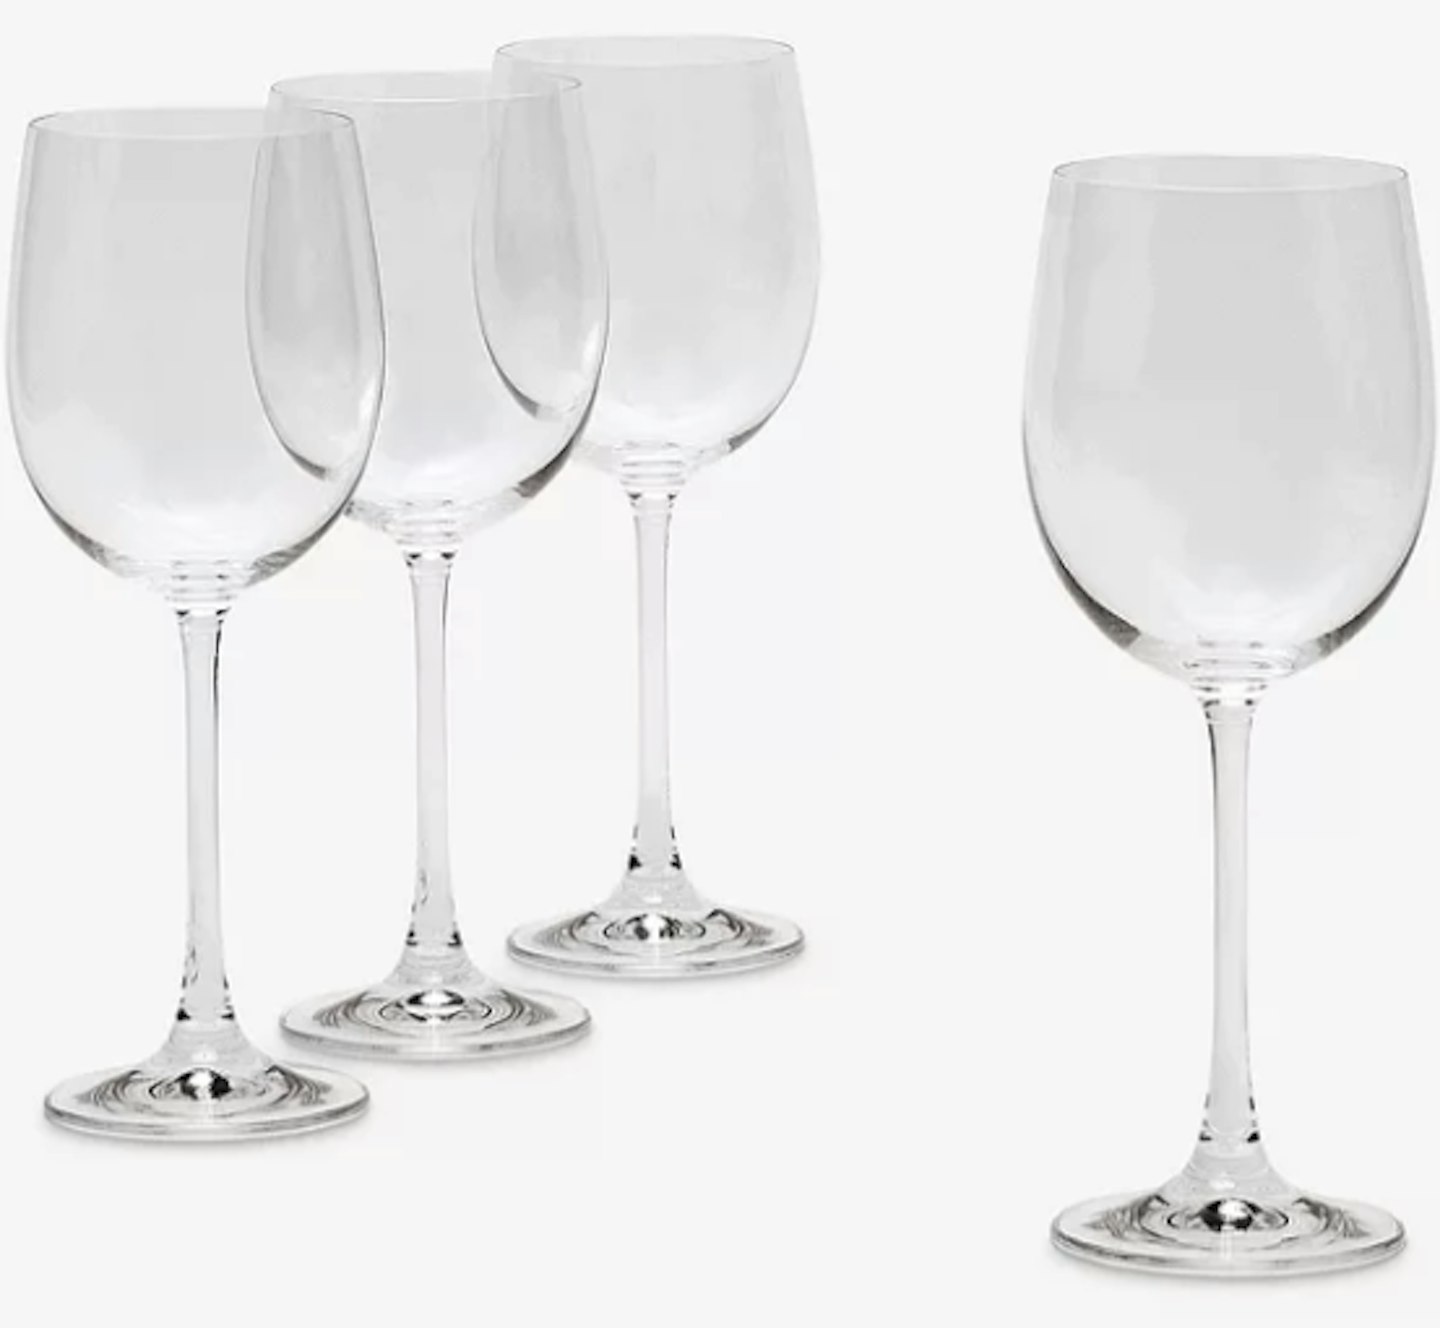 https://images.bauerhosting.com/affiliates/sites/10/2022/07/John-Lewis-Partners-Dine-White-Wine-Glass.png?auto=format&w=1440&q=80